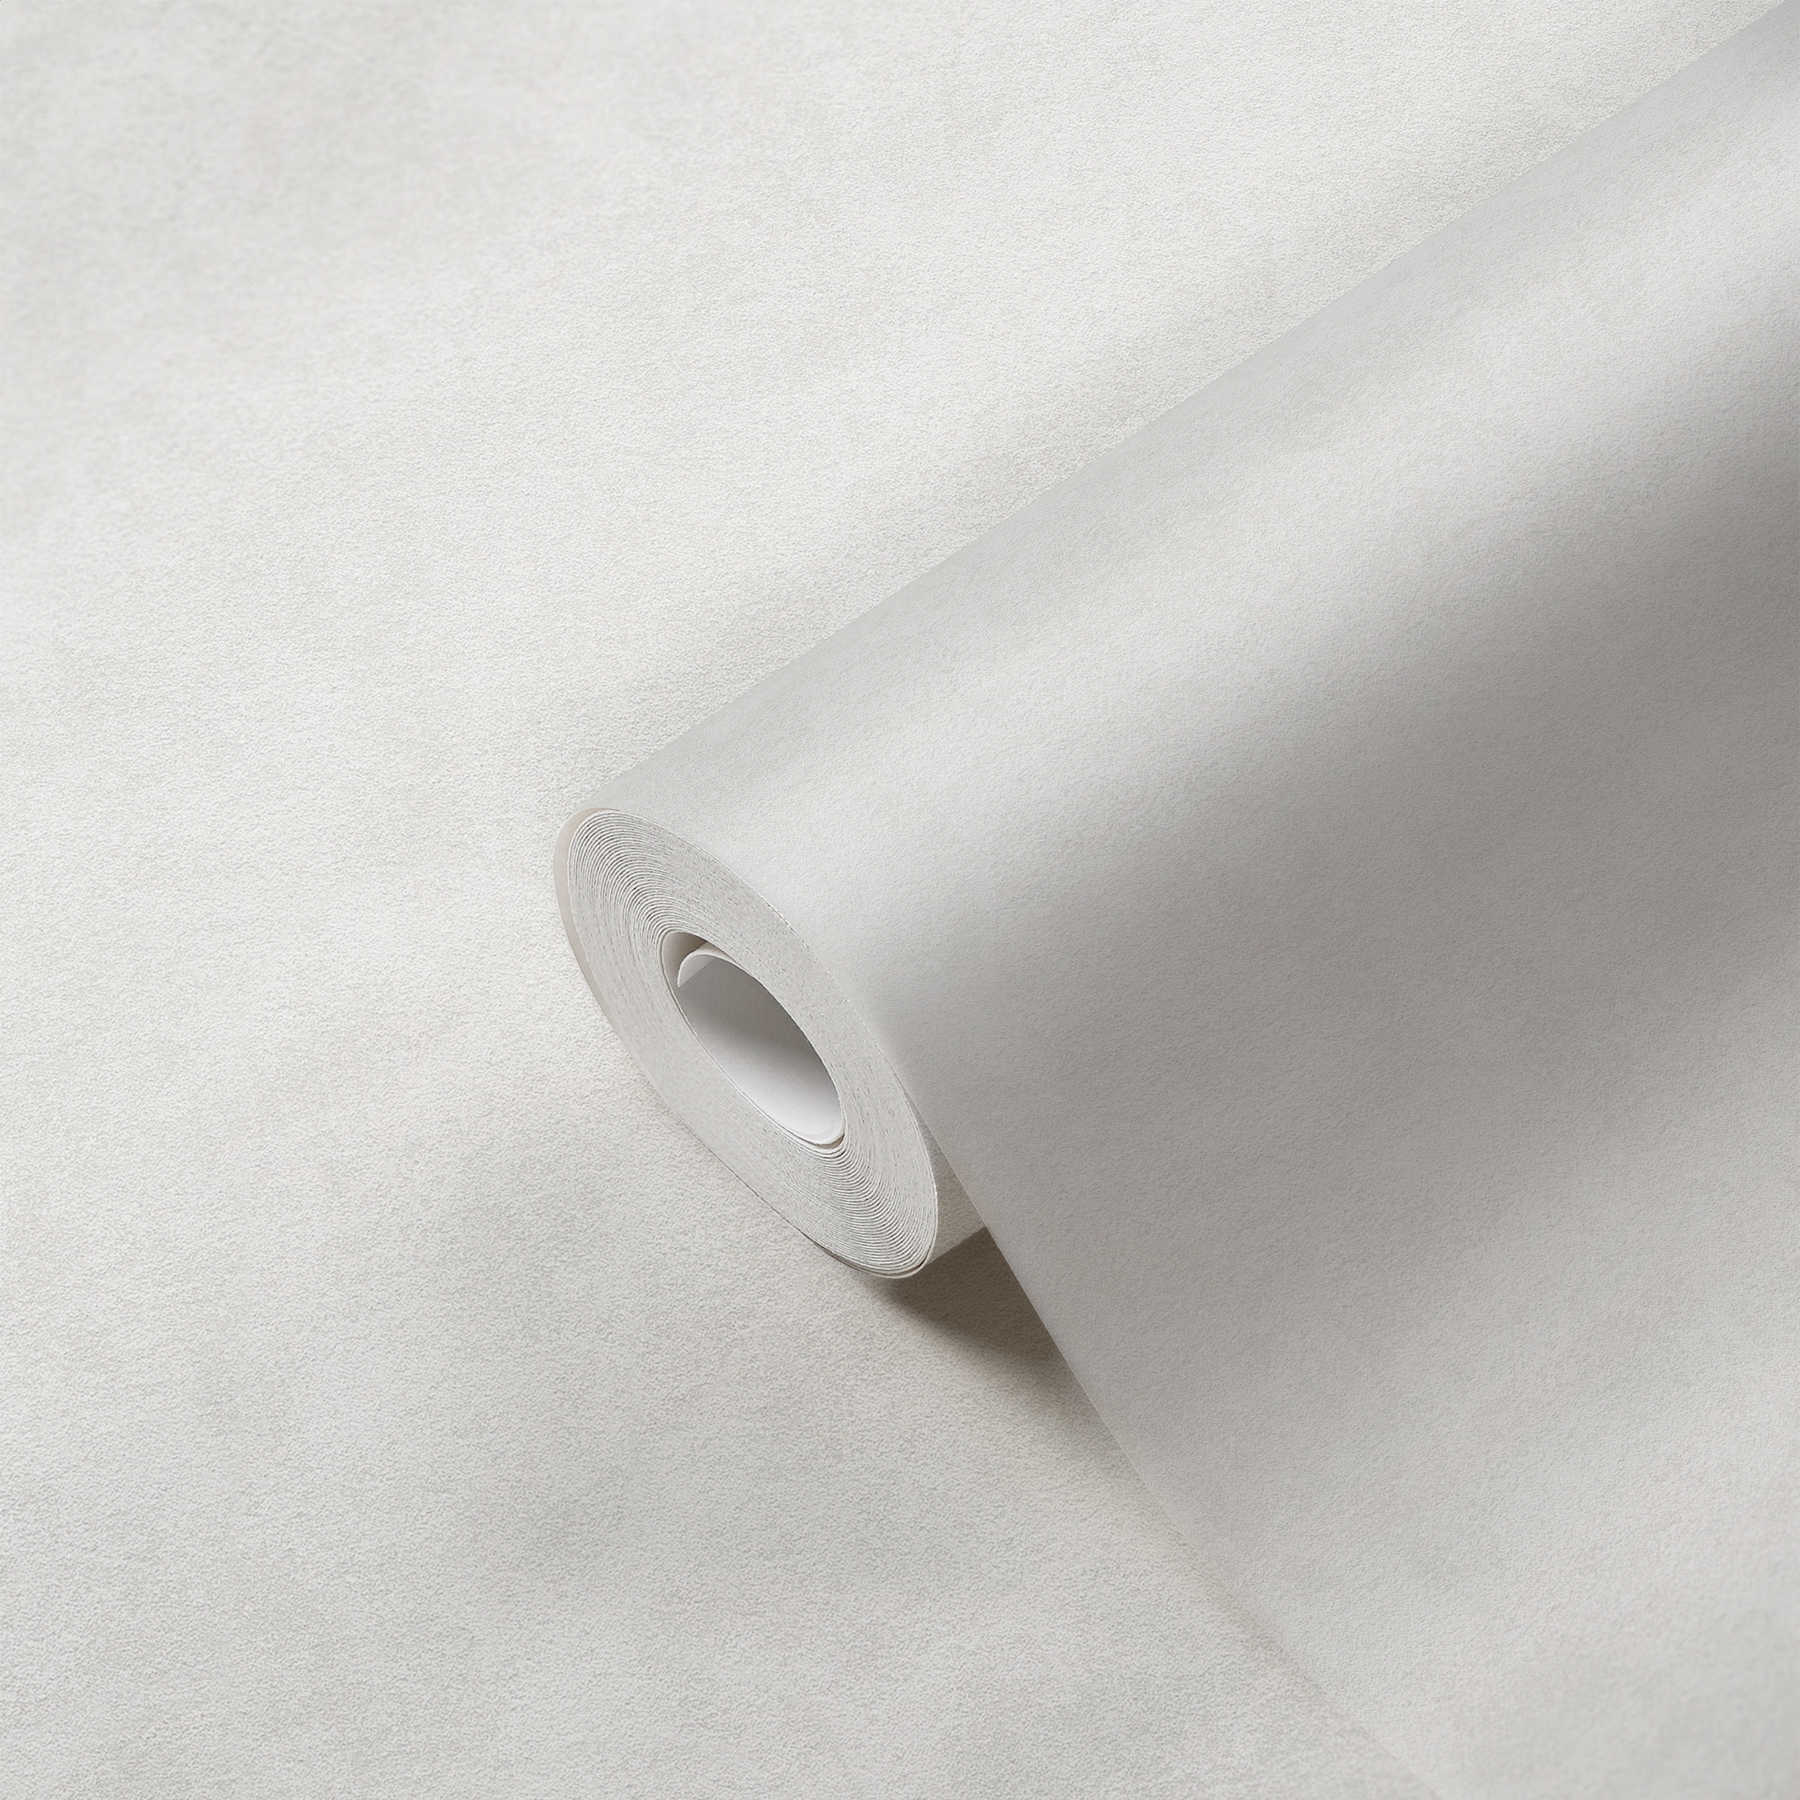             Plain wallpaper cream beige with neutral texture pattern
        